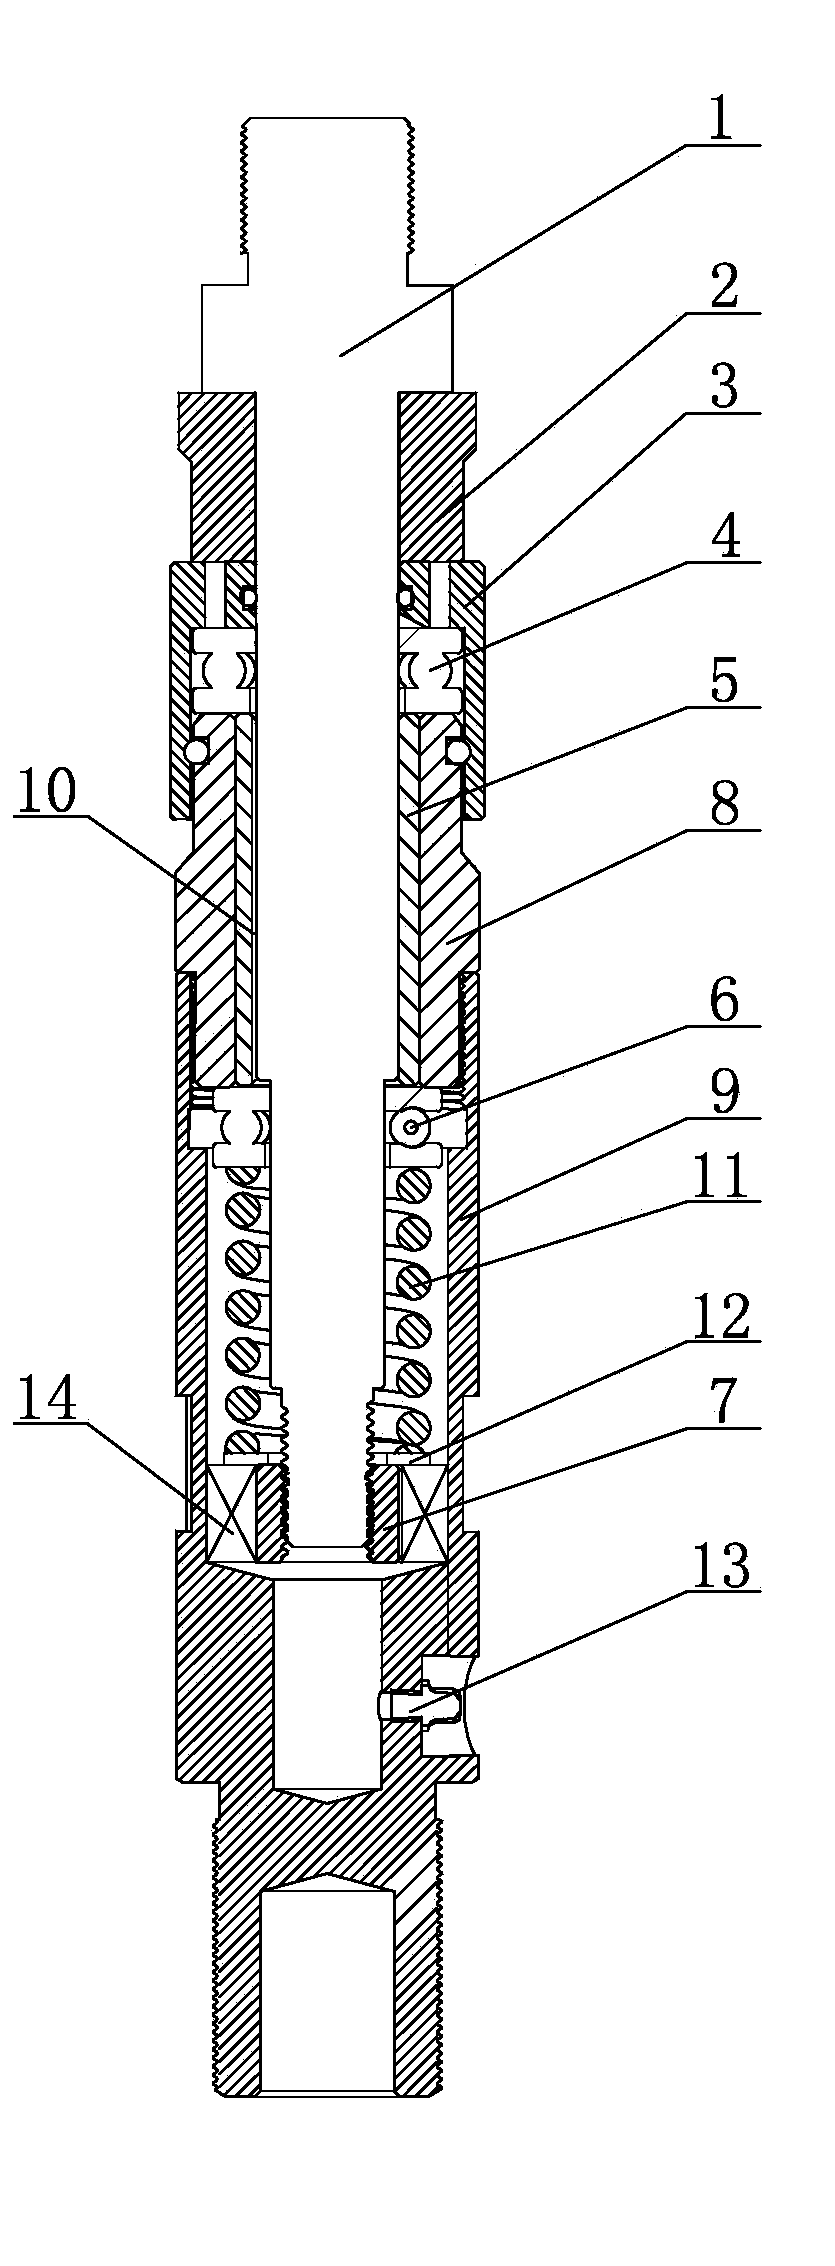 Novel internal single-action mechanism of drilling tool